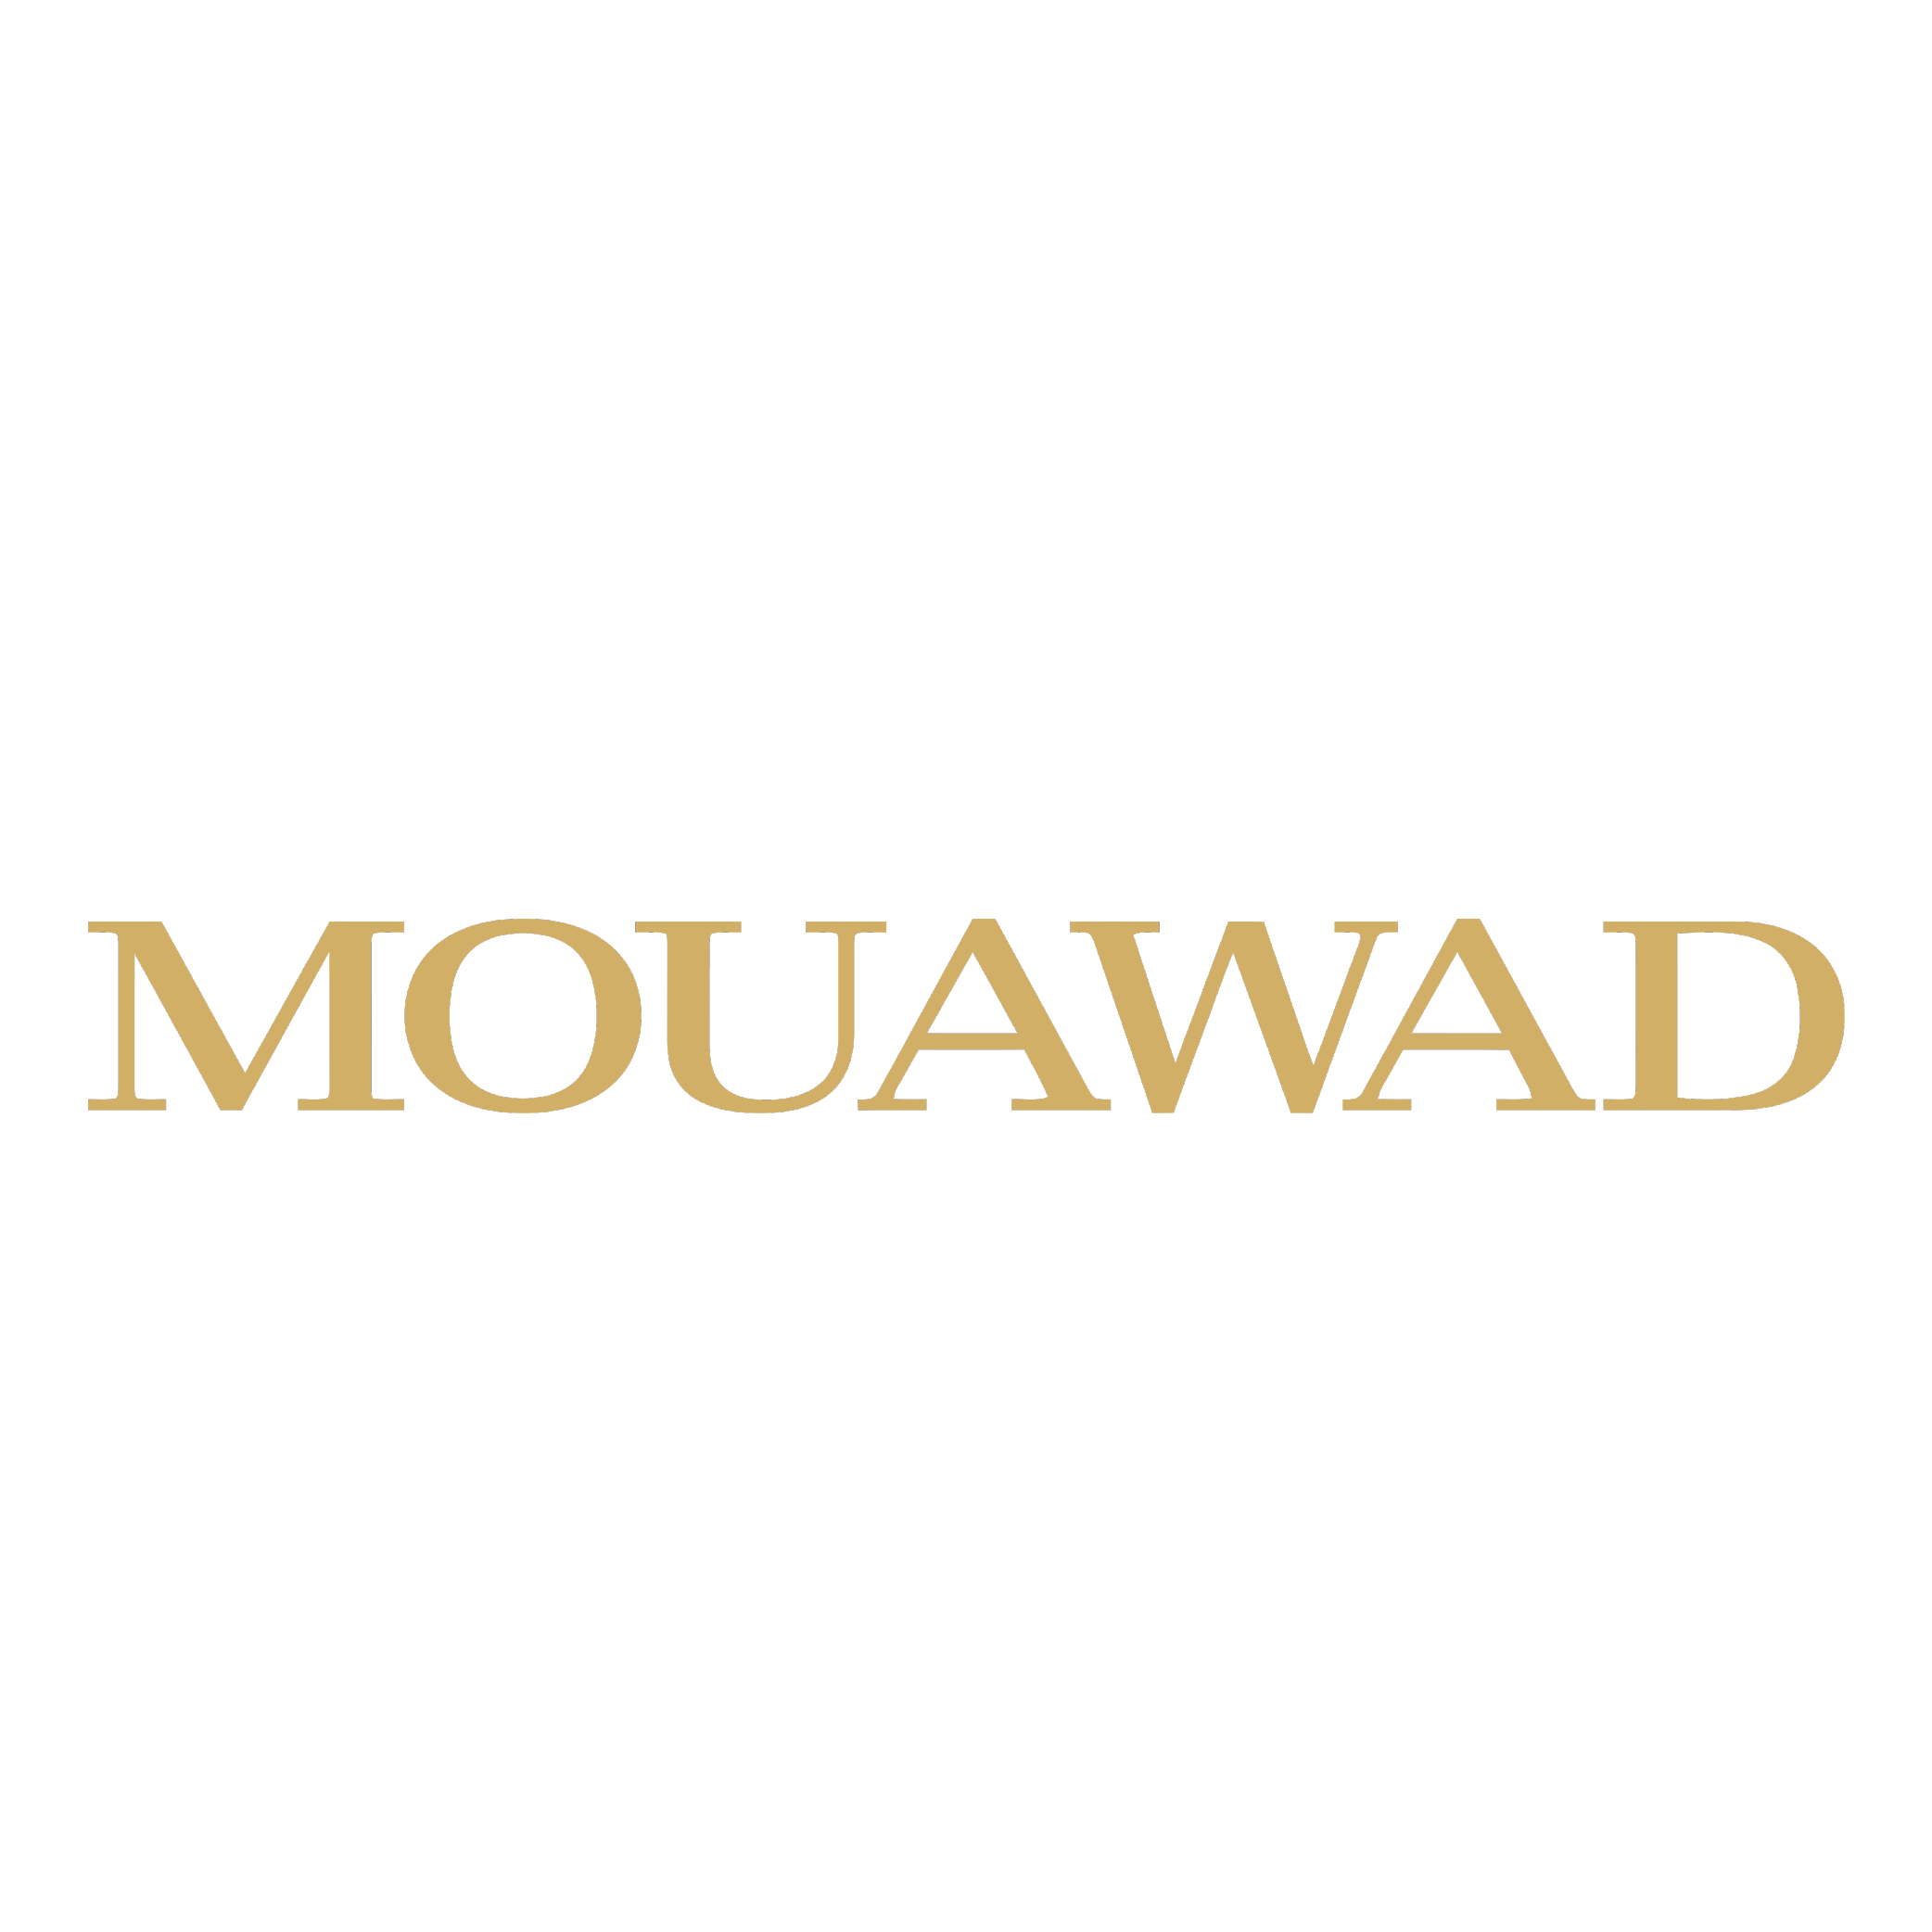 Mouawad logo - SEC Newgate